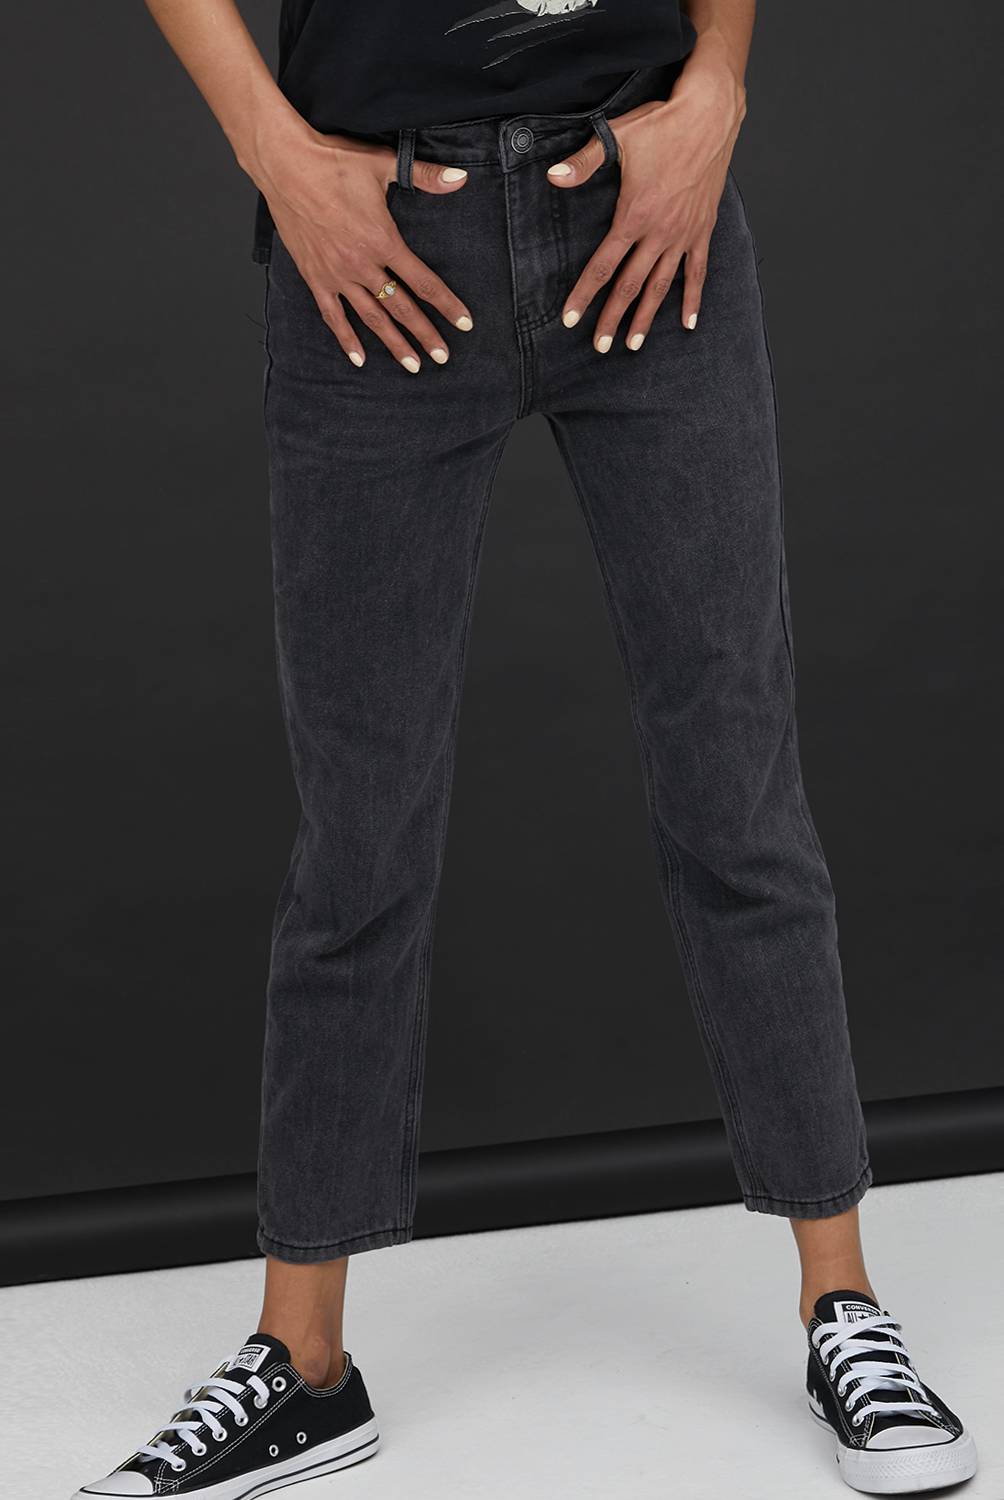 AMERICANINO - Americanino Jeans Mom Tiro Alto Mujer